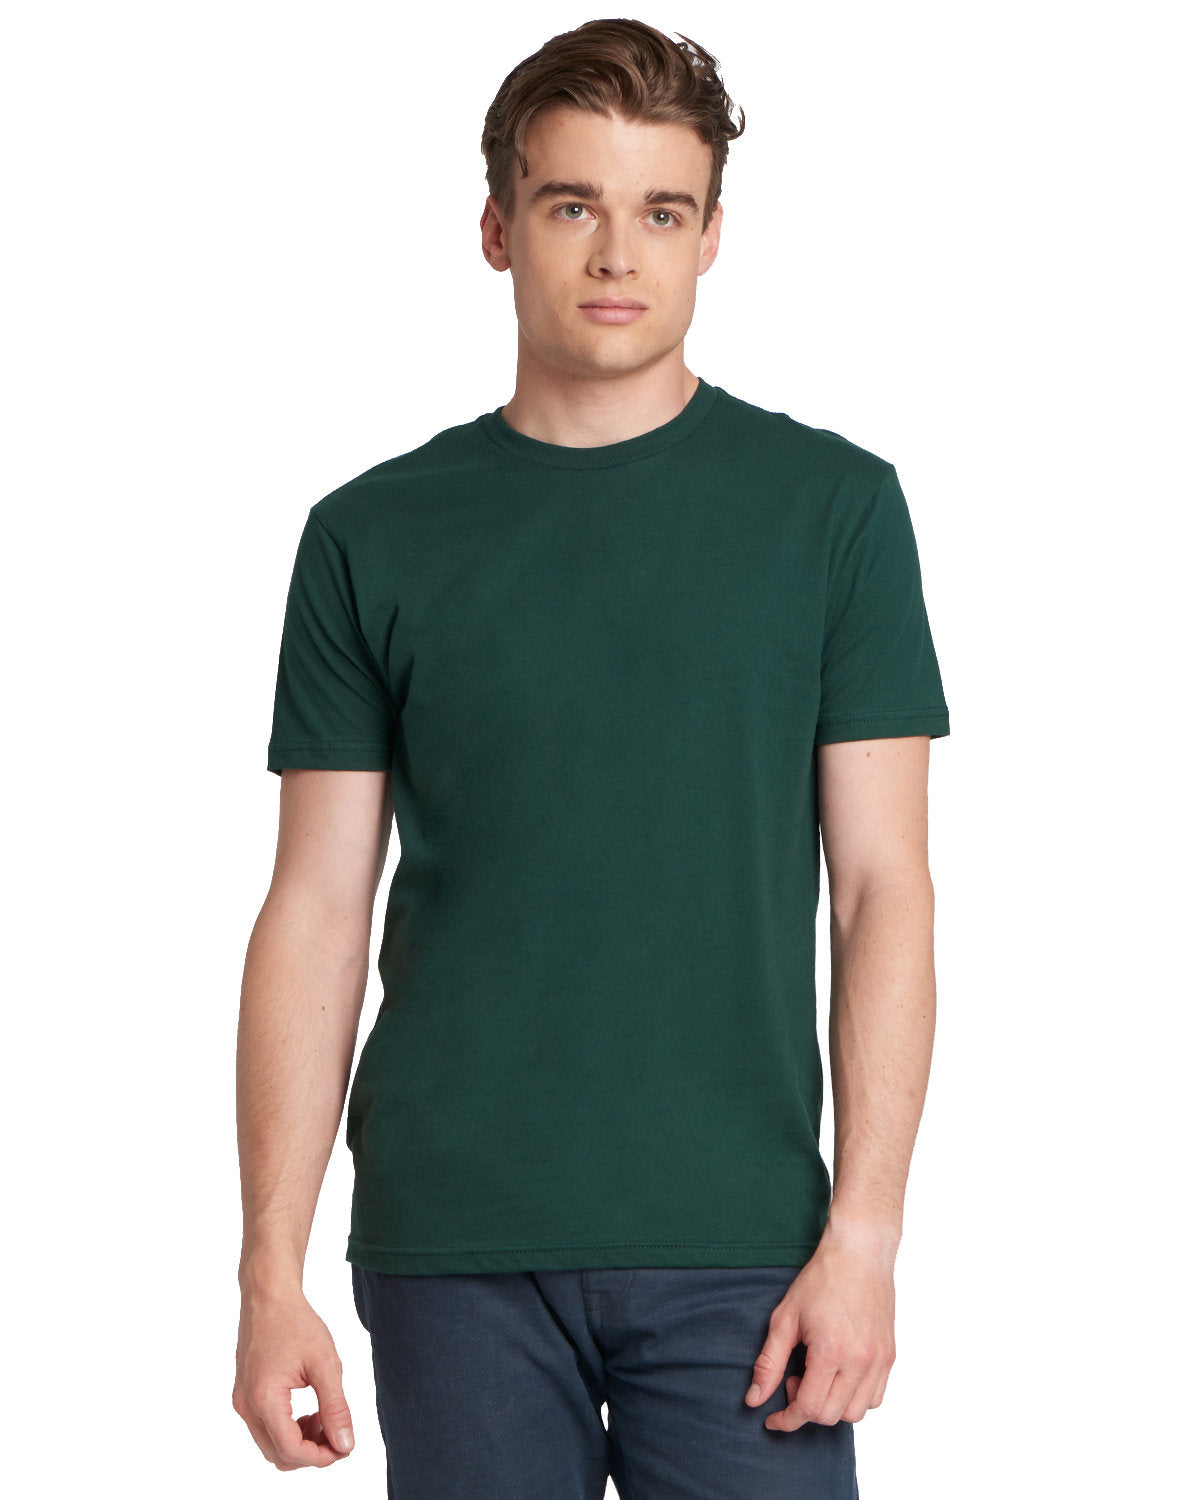 Forrest Green 100% Cotton Next Level T-shirt 